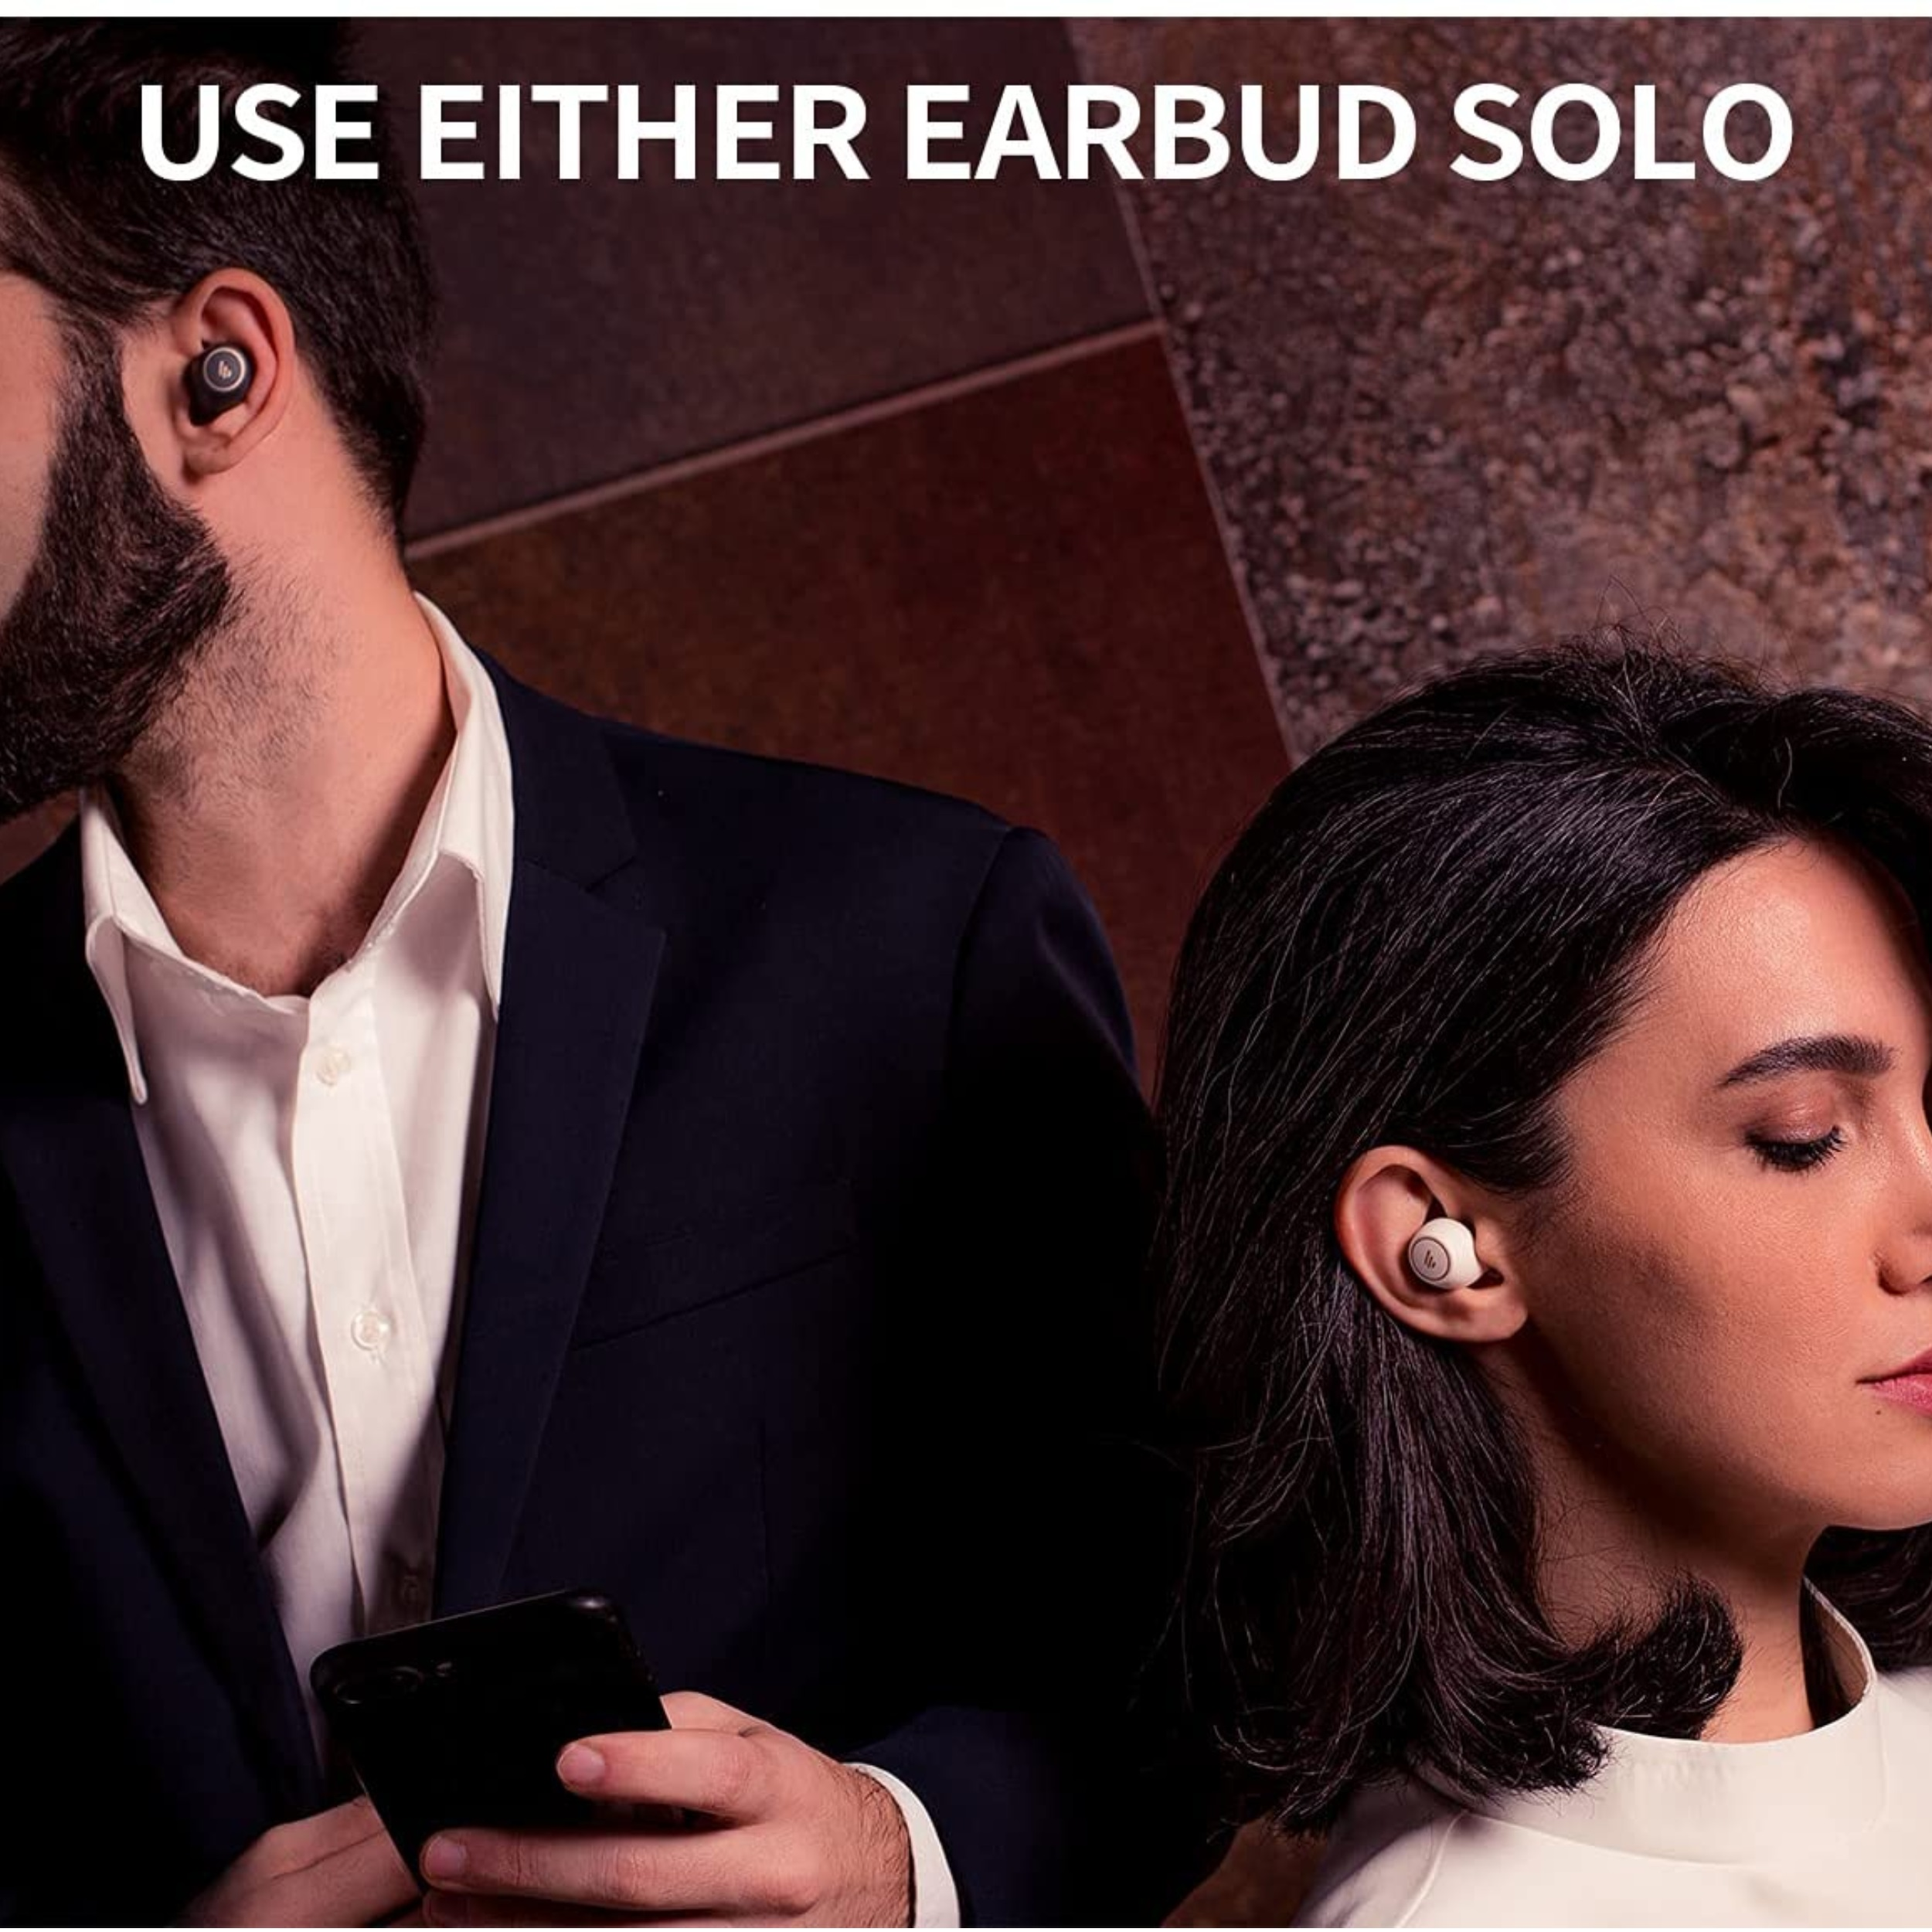 EDIFIER TWS1 PRO, In-ear Bluetooth Grau Bluetooth-Kopfhörer